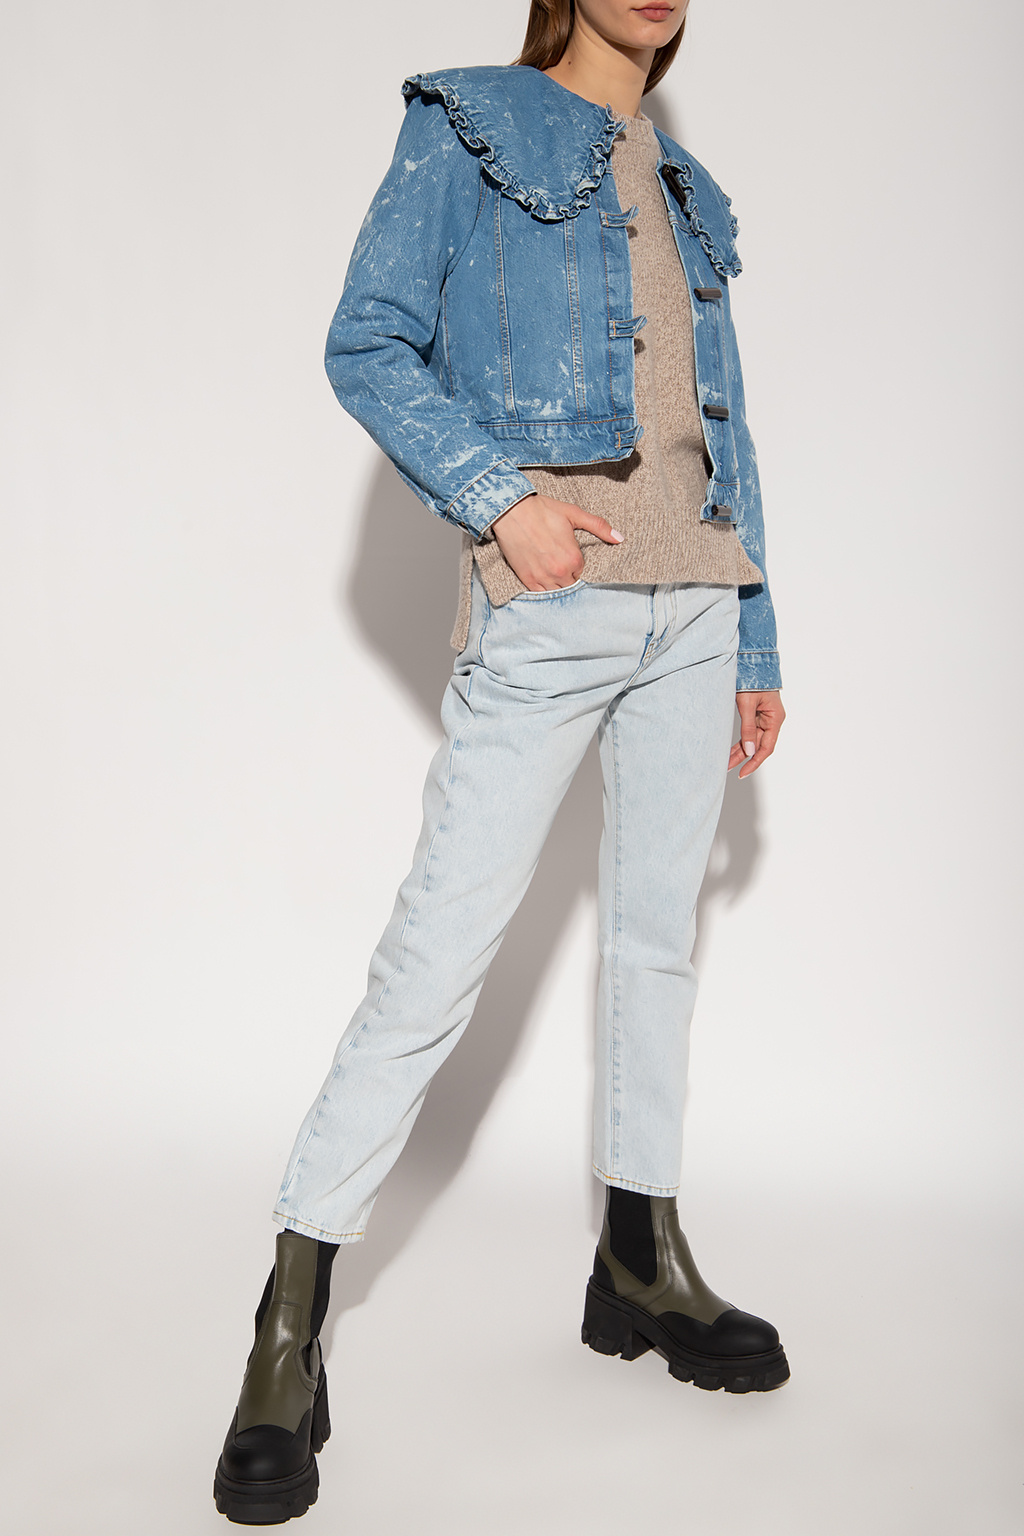 Off-White logo jeans rag bone trousers blk